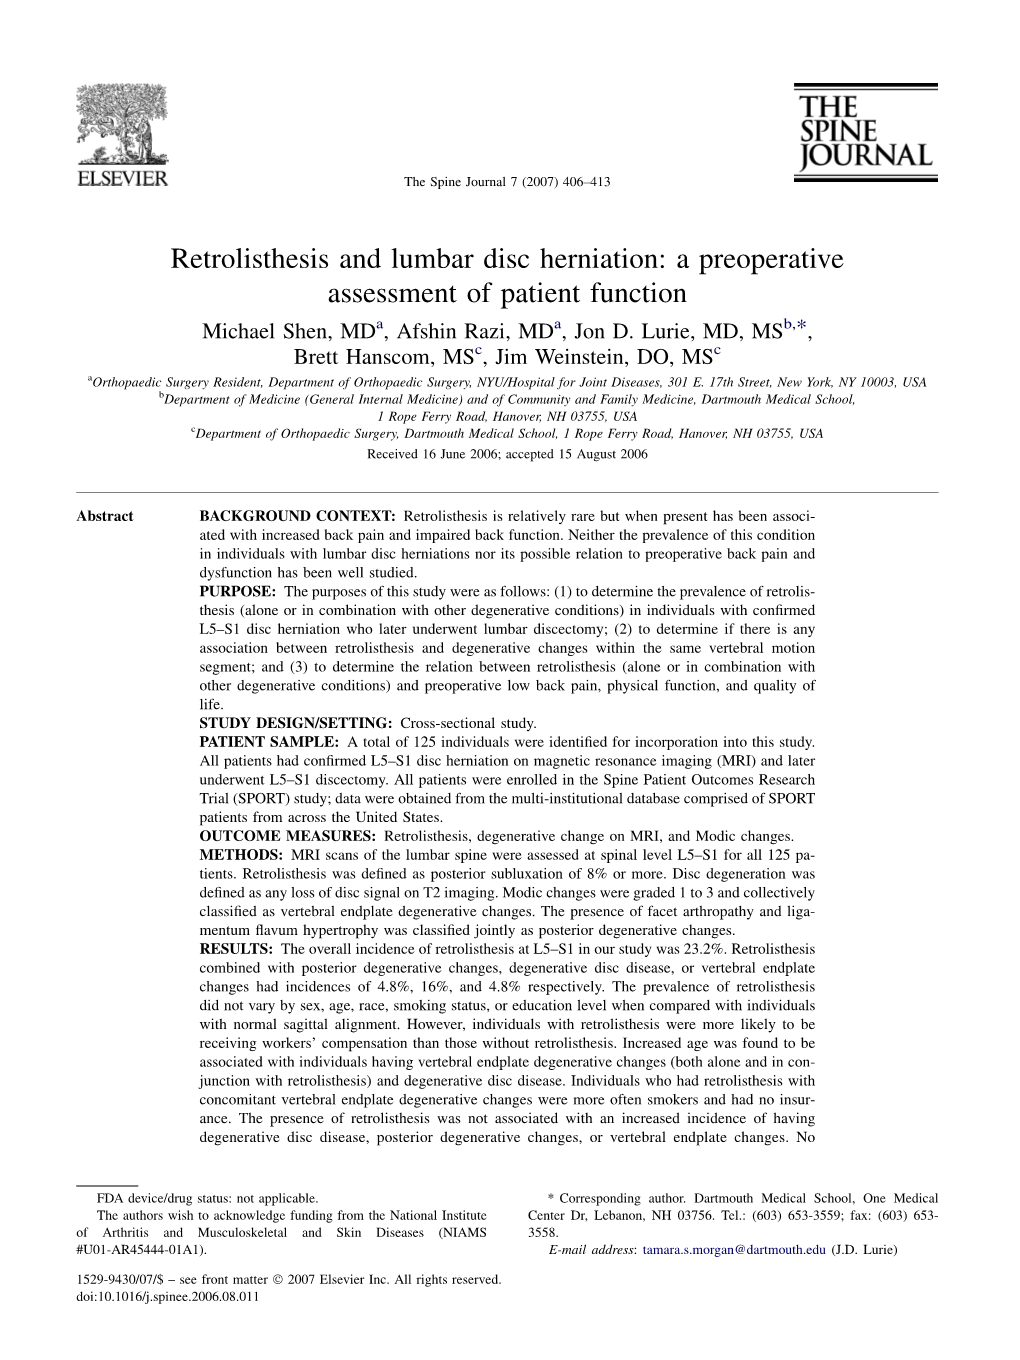 Retrolisthesis and Lumbar Disc Herniation: a Preoperative Assessment of Patient Function Michael Shen, Mda, Afshin Razi, Mda, Jon D